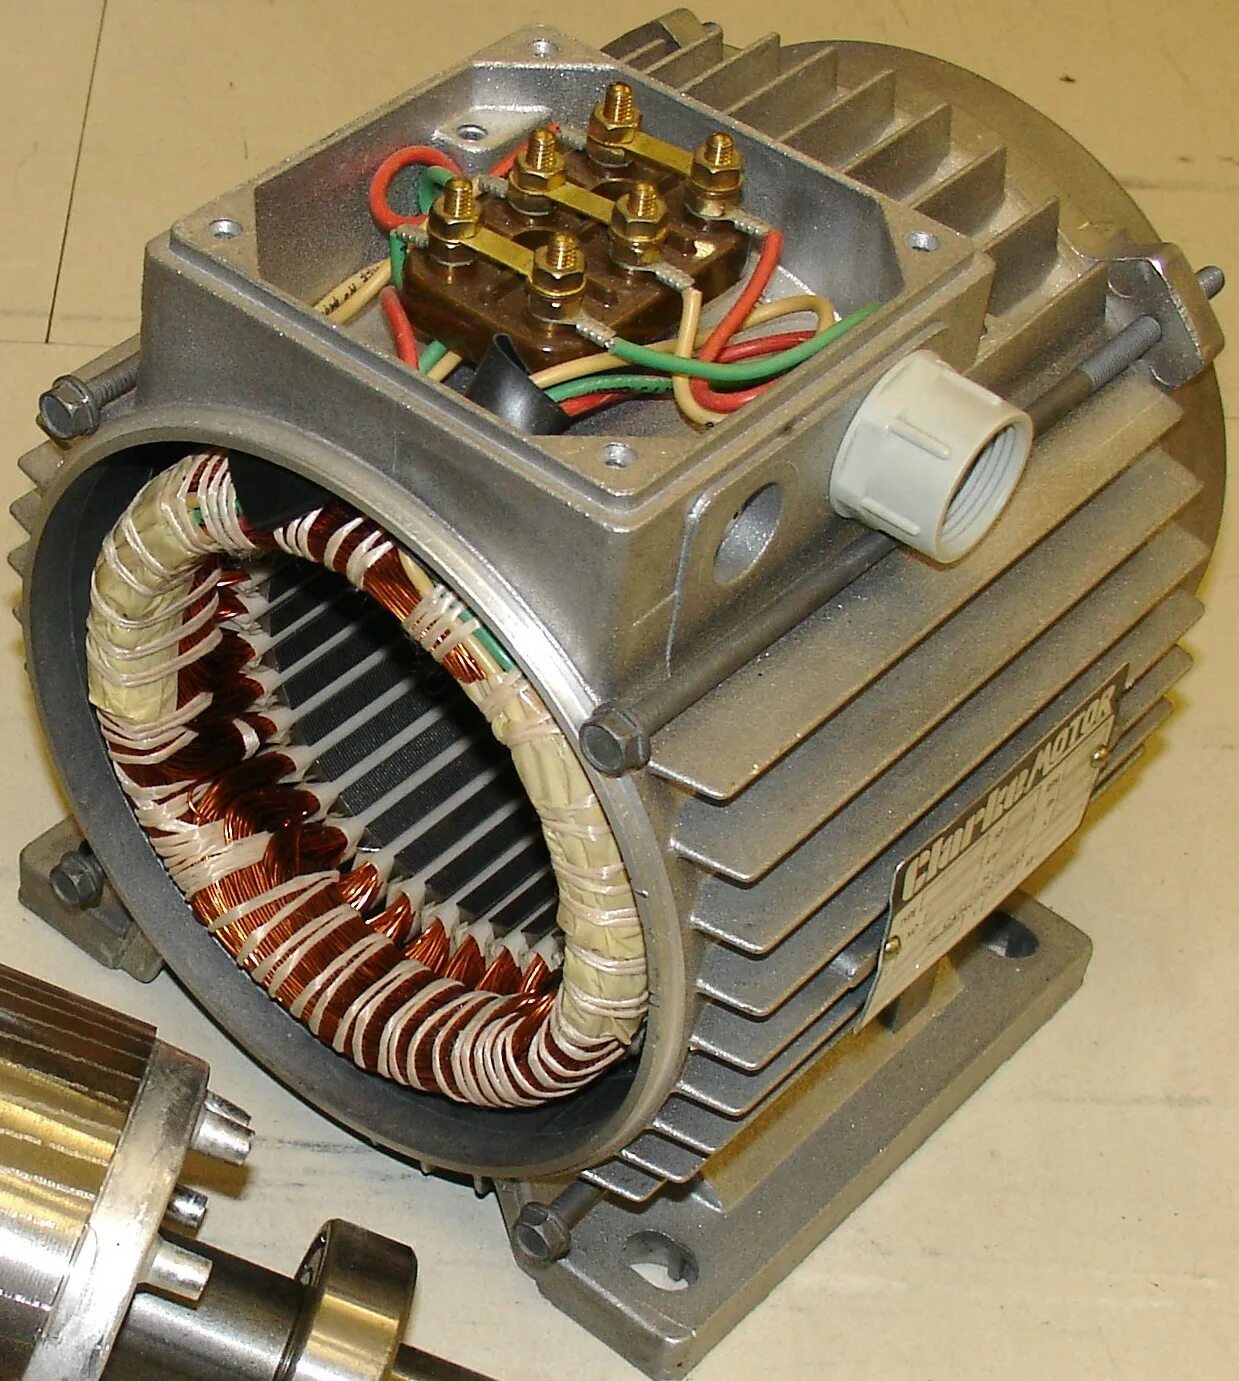 Three phase motors. Статор асинхронного электродвигателя. Статор электродвигателя GM 192. Двигатель асинхронный 380 статор. Статор асинхронного двигателя 15квт.